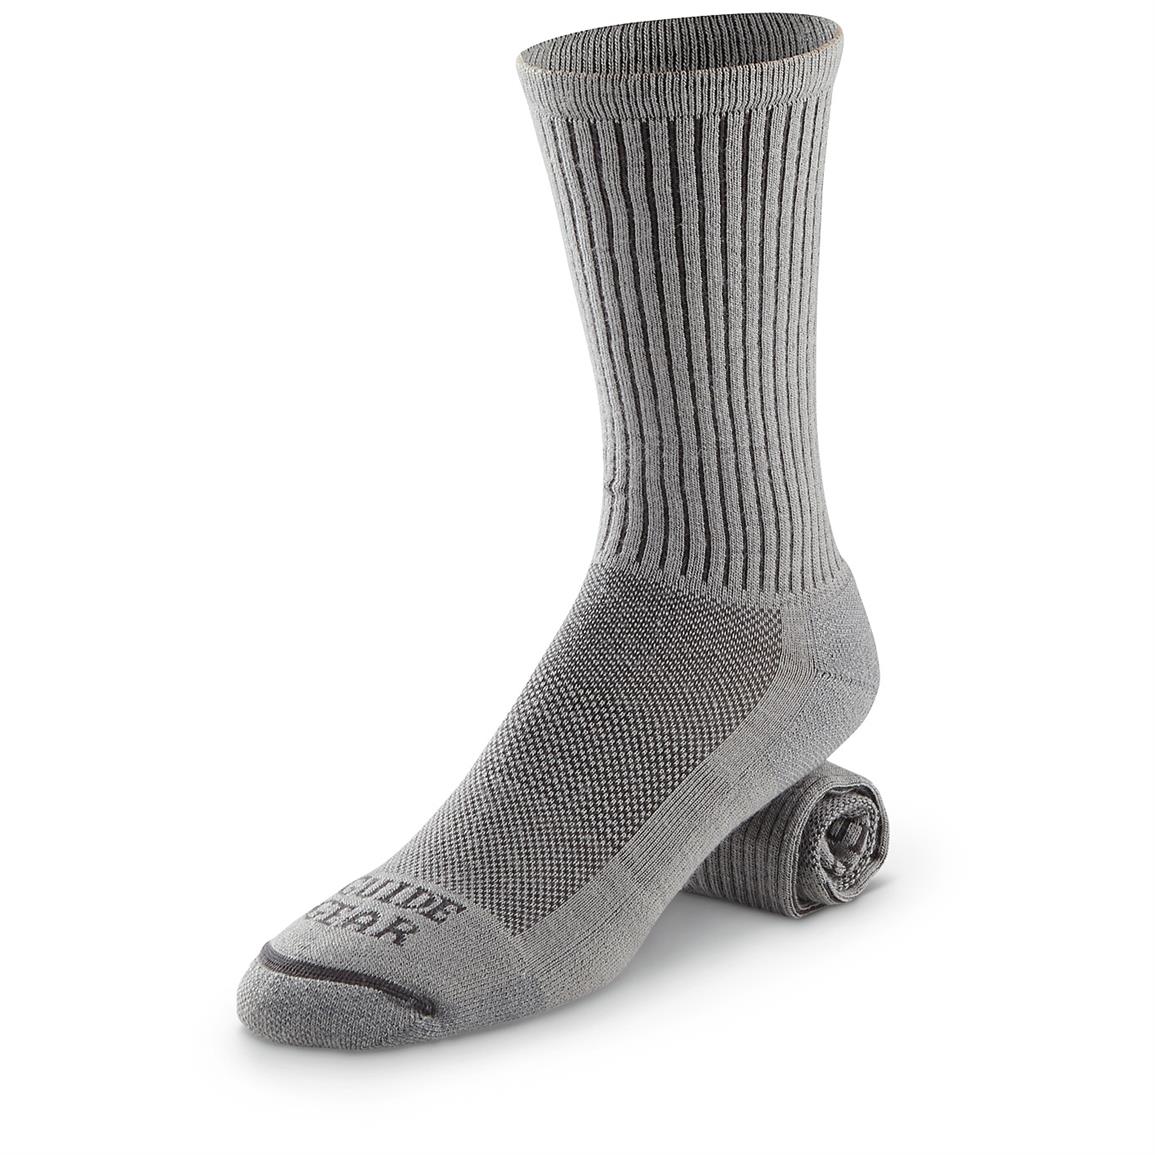 Guide Gear Lifetime Lightweight Socks with NanoGLIDE, Gray